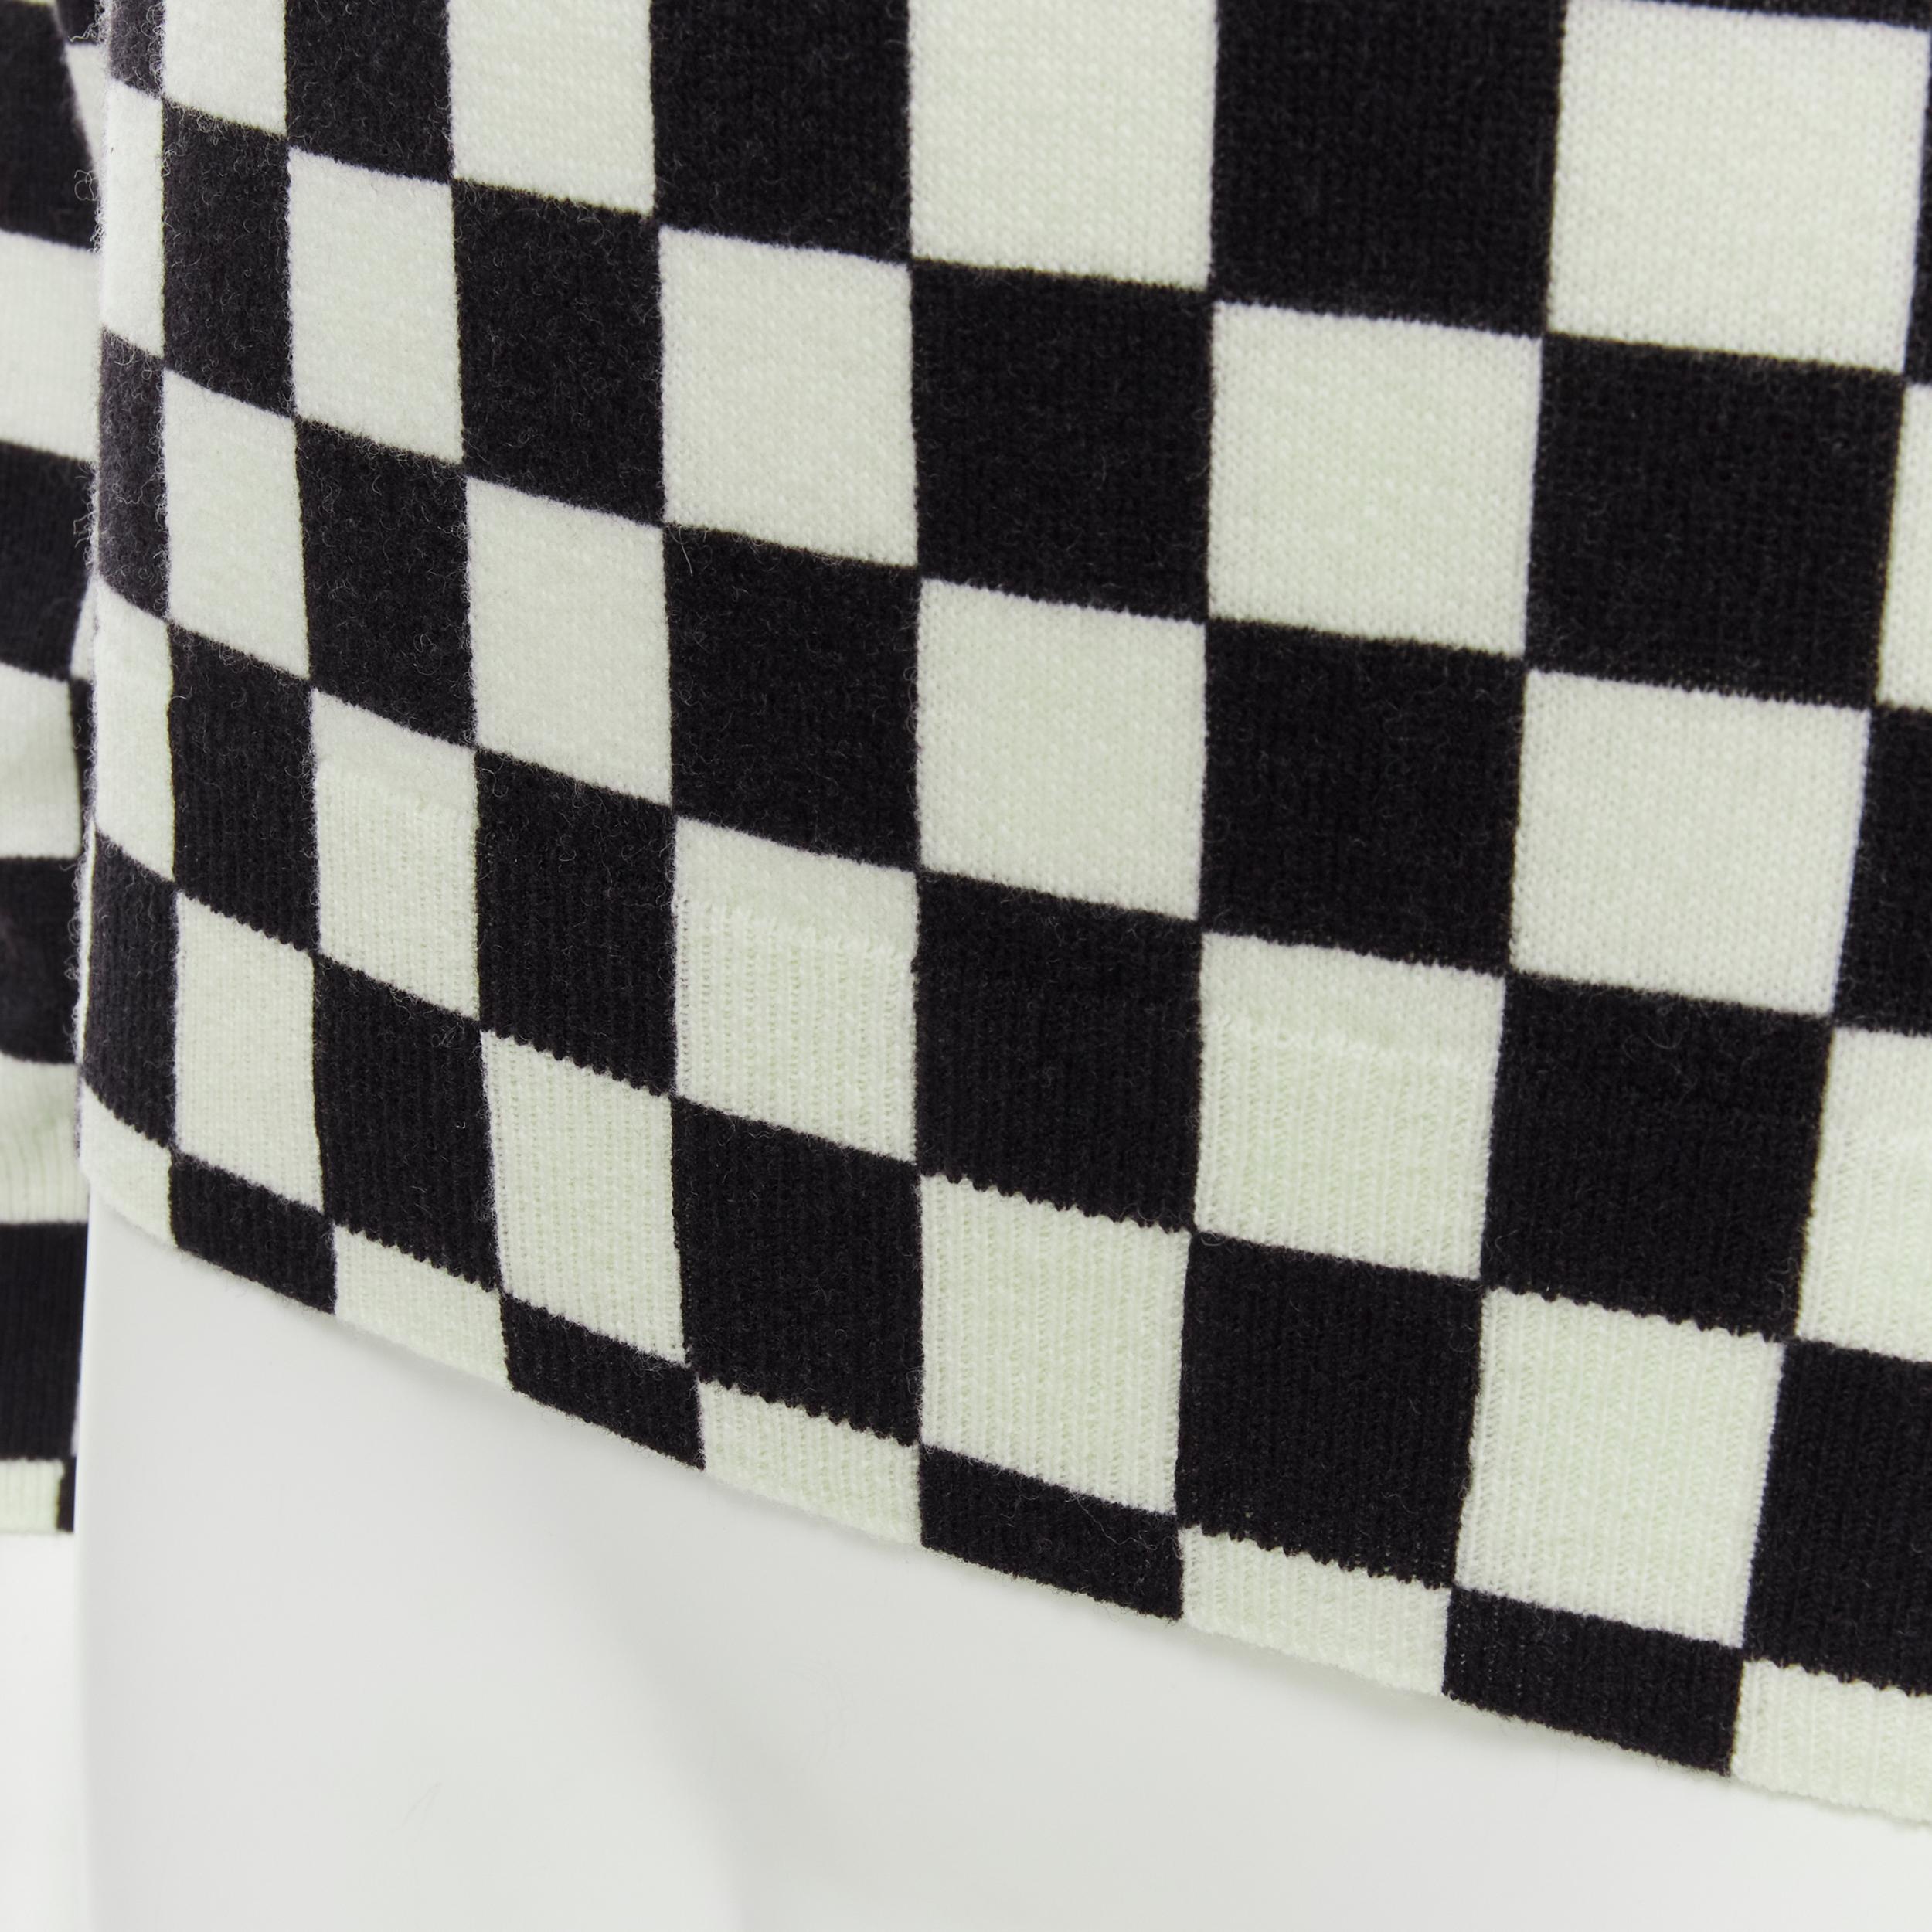 new CELINE Hedi Slimane 2019 Runway black white Damier checkered polo sweater M 2